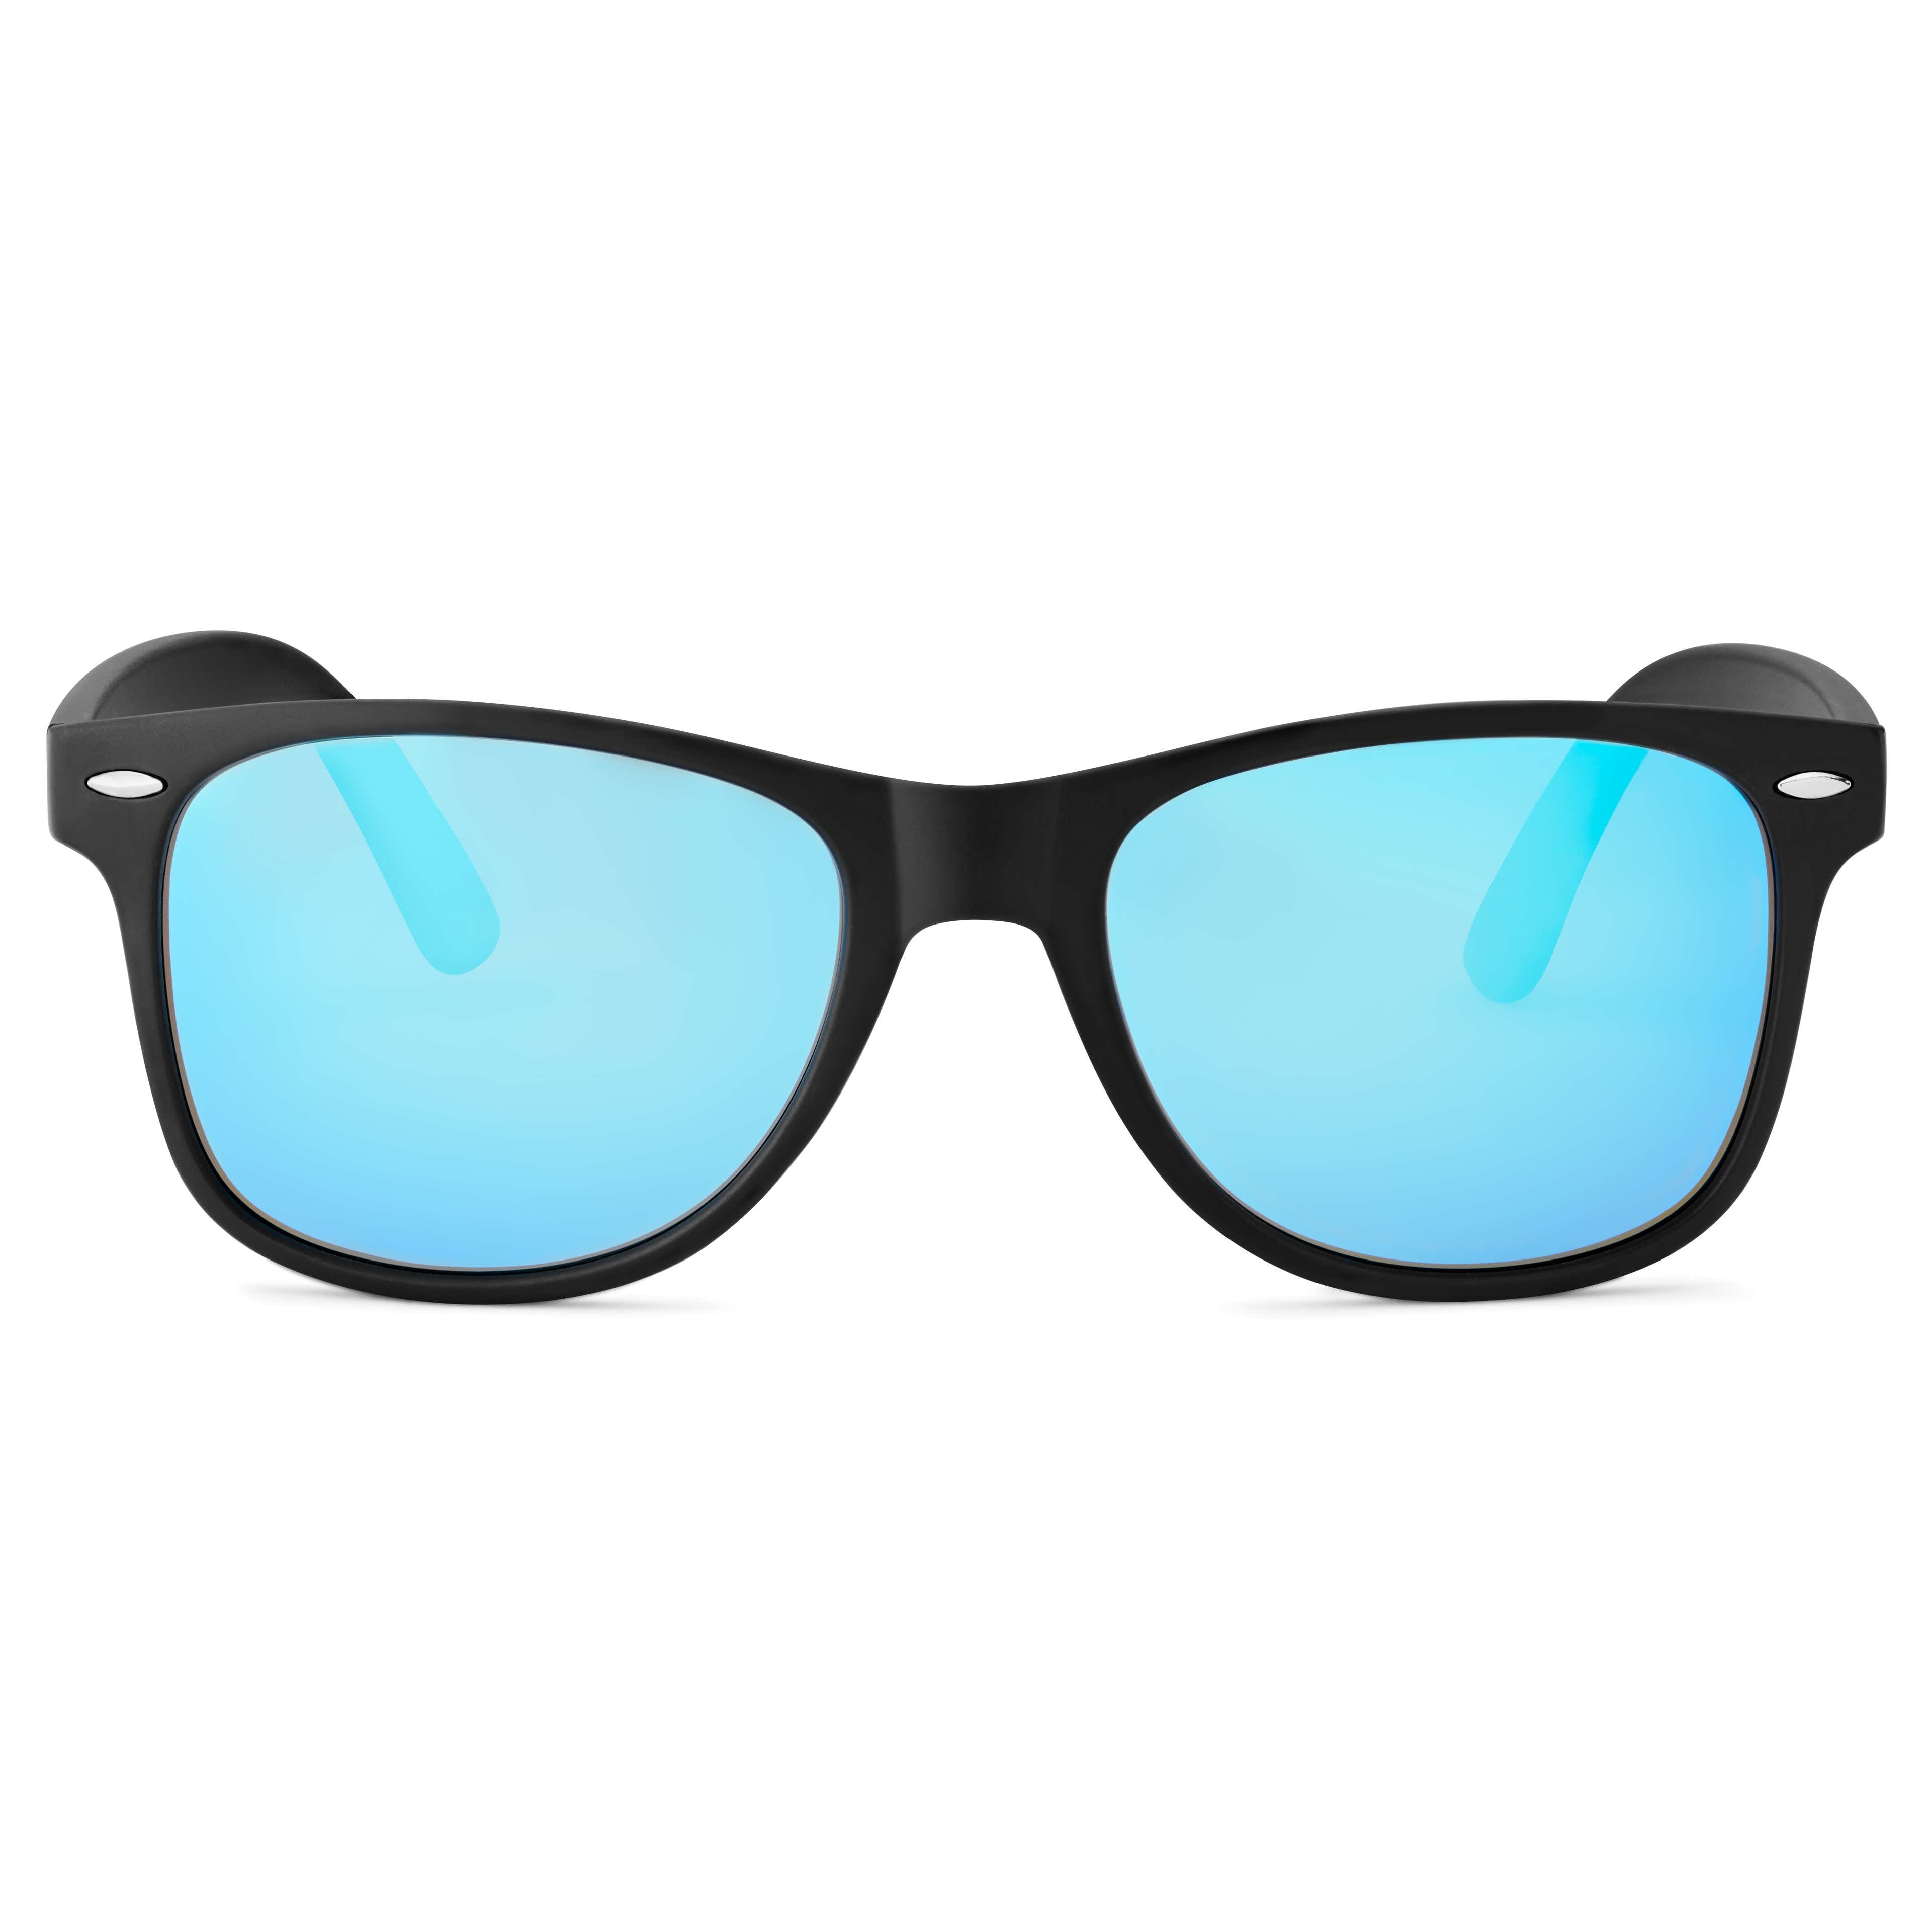 Black & Blue Polarised Retro Sunglasses - 2 - hover gallery